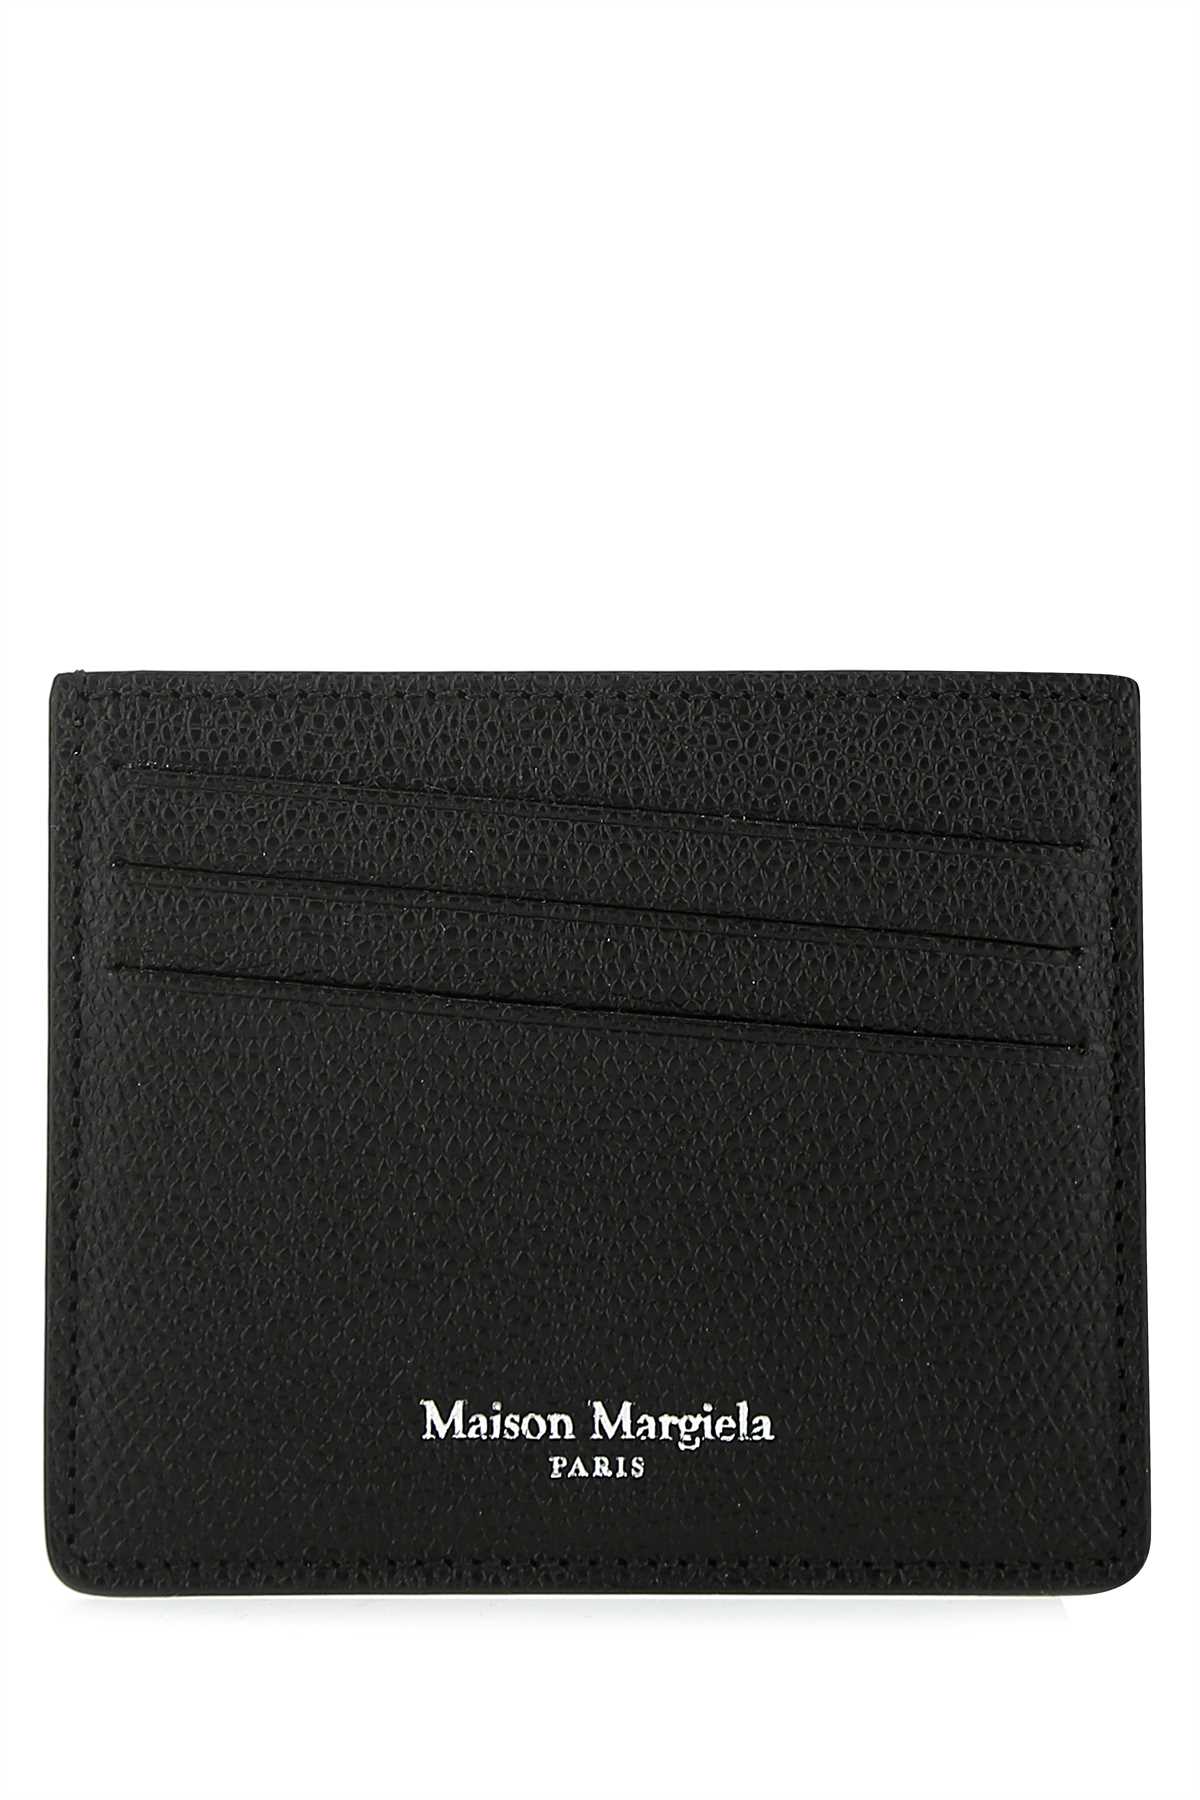 Maison Margiela Four Stitches Cardholder In Black